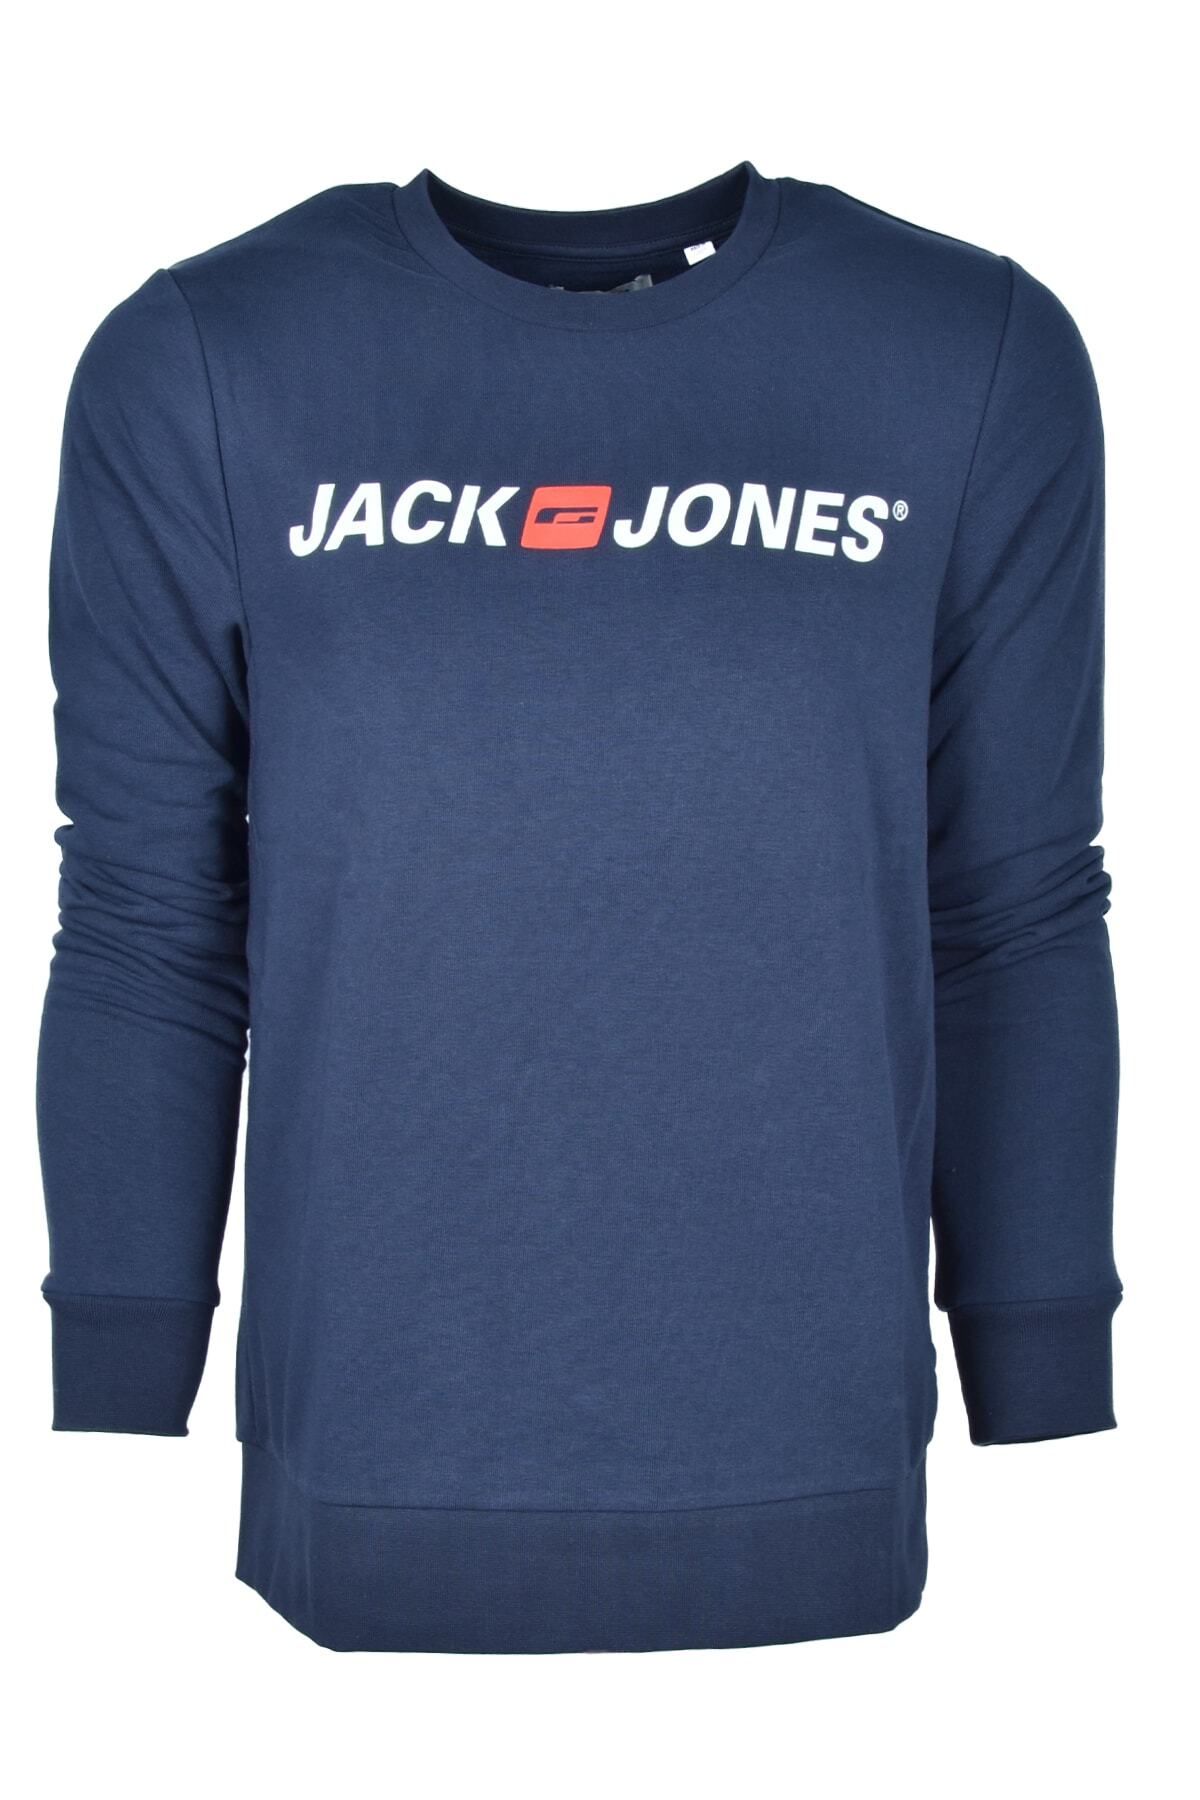 Jack & Jones Erkek Lacivert Sweatshirt 12190771-lacivert